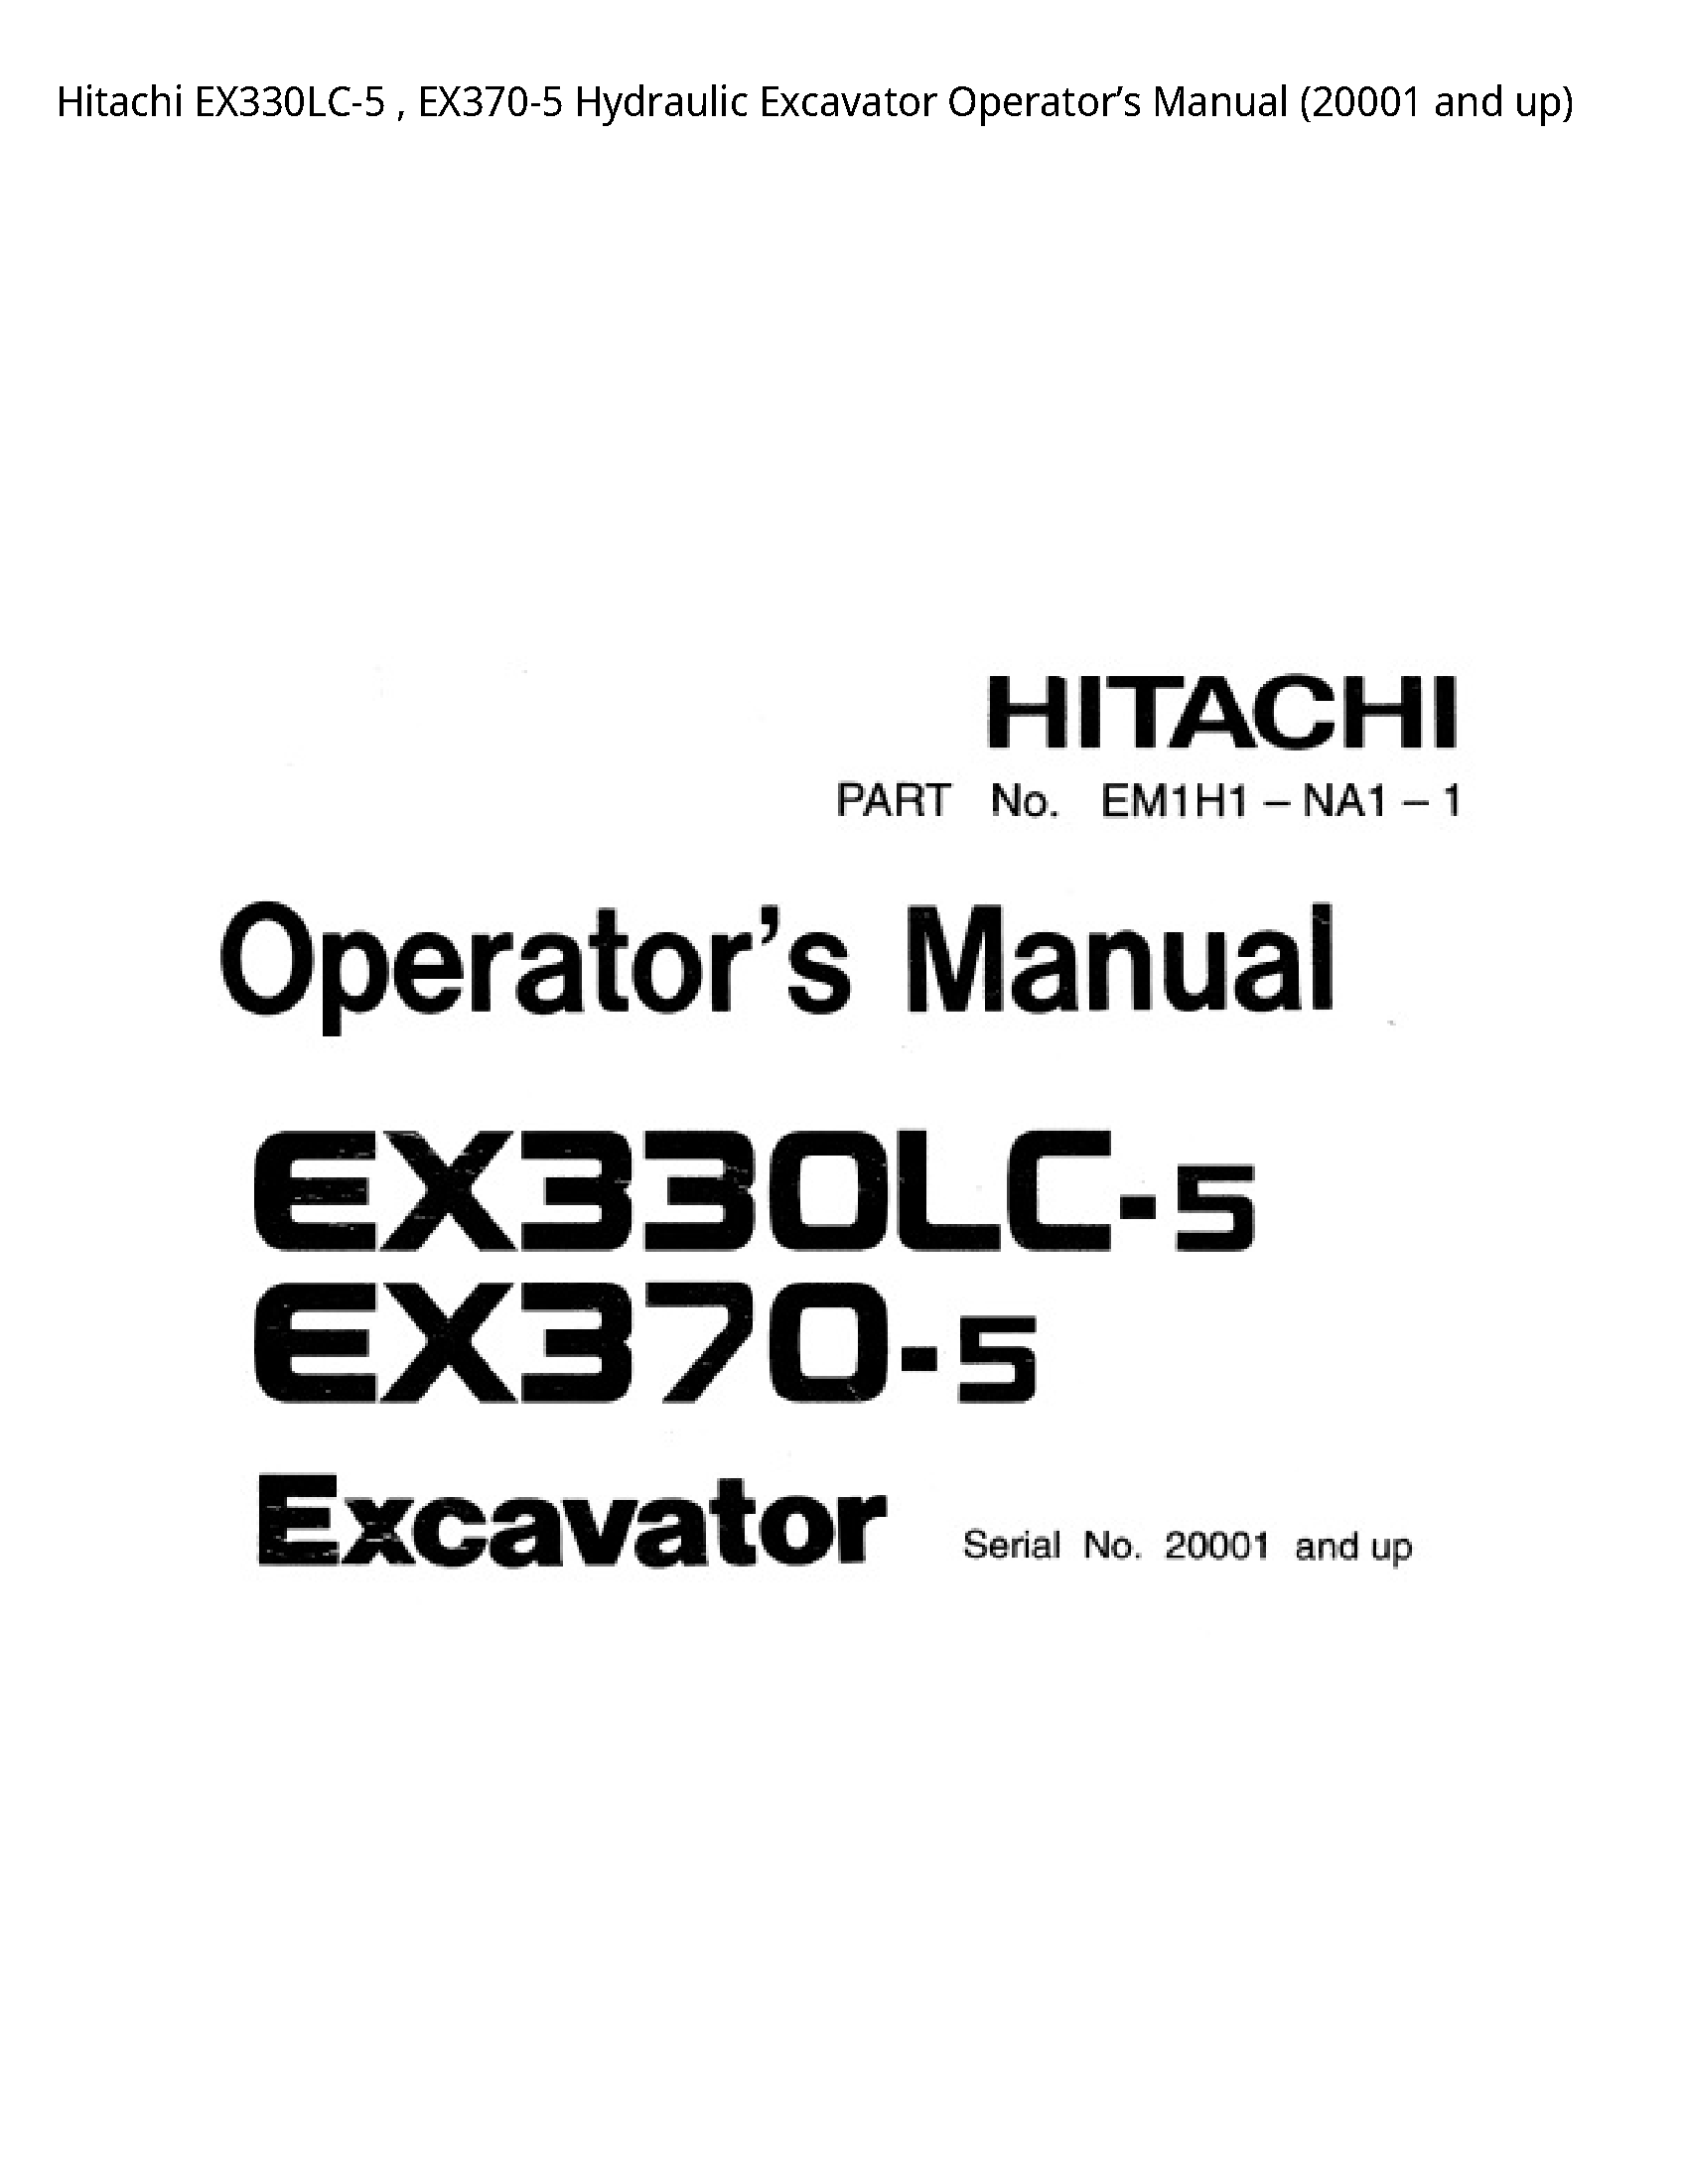 Hitachi EX330LC-5 Hydraulic Excavator Operator’s manual